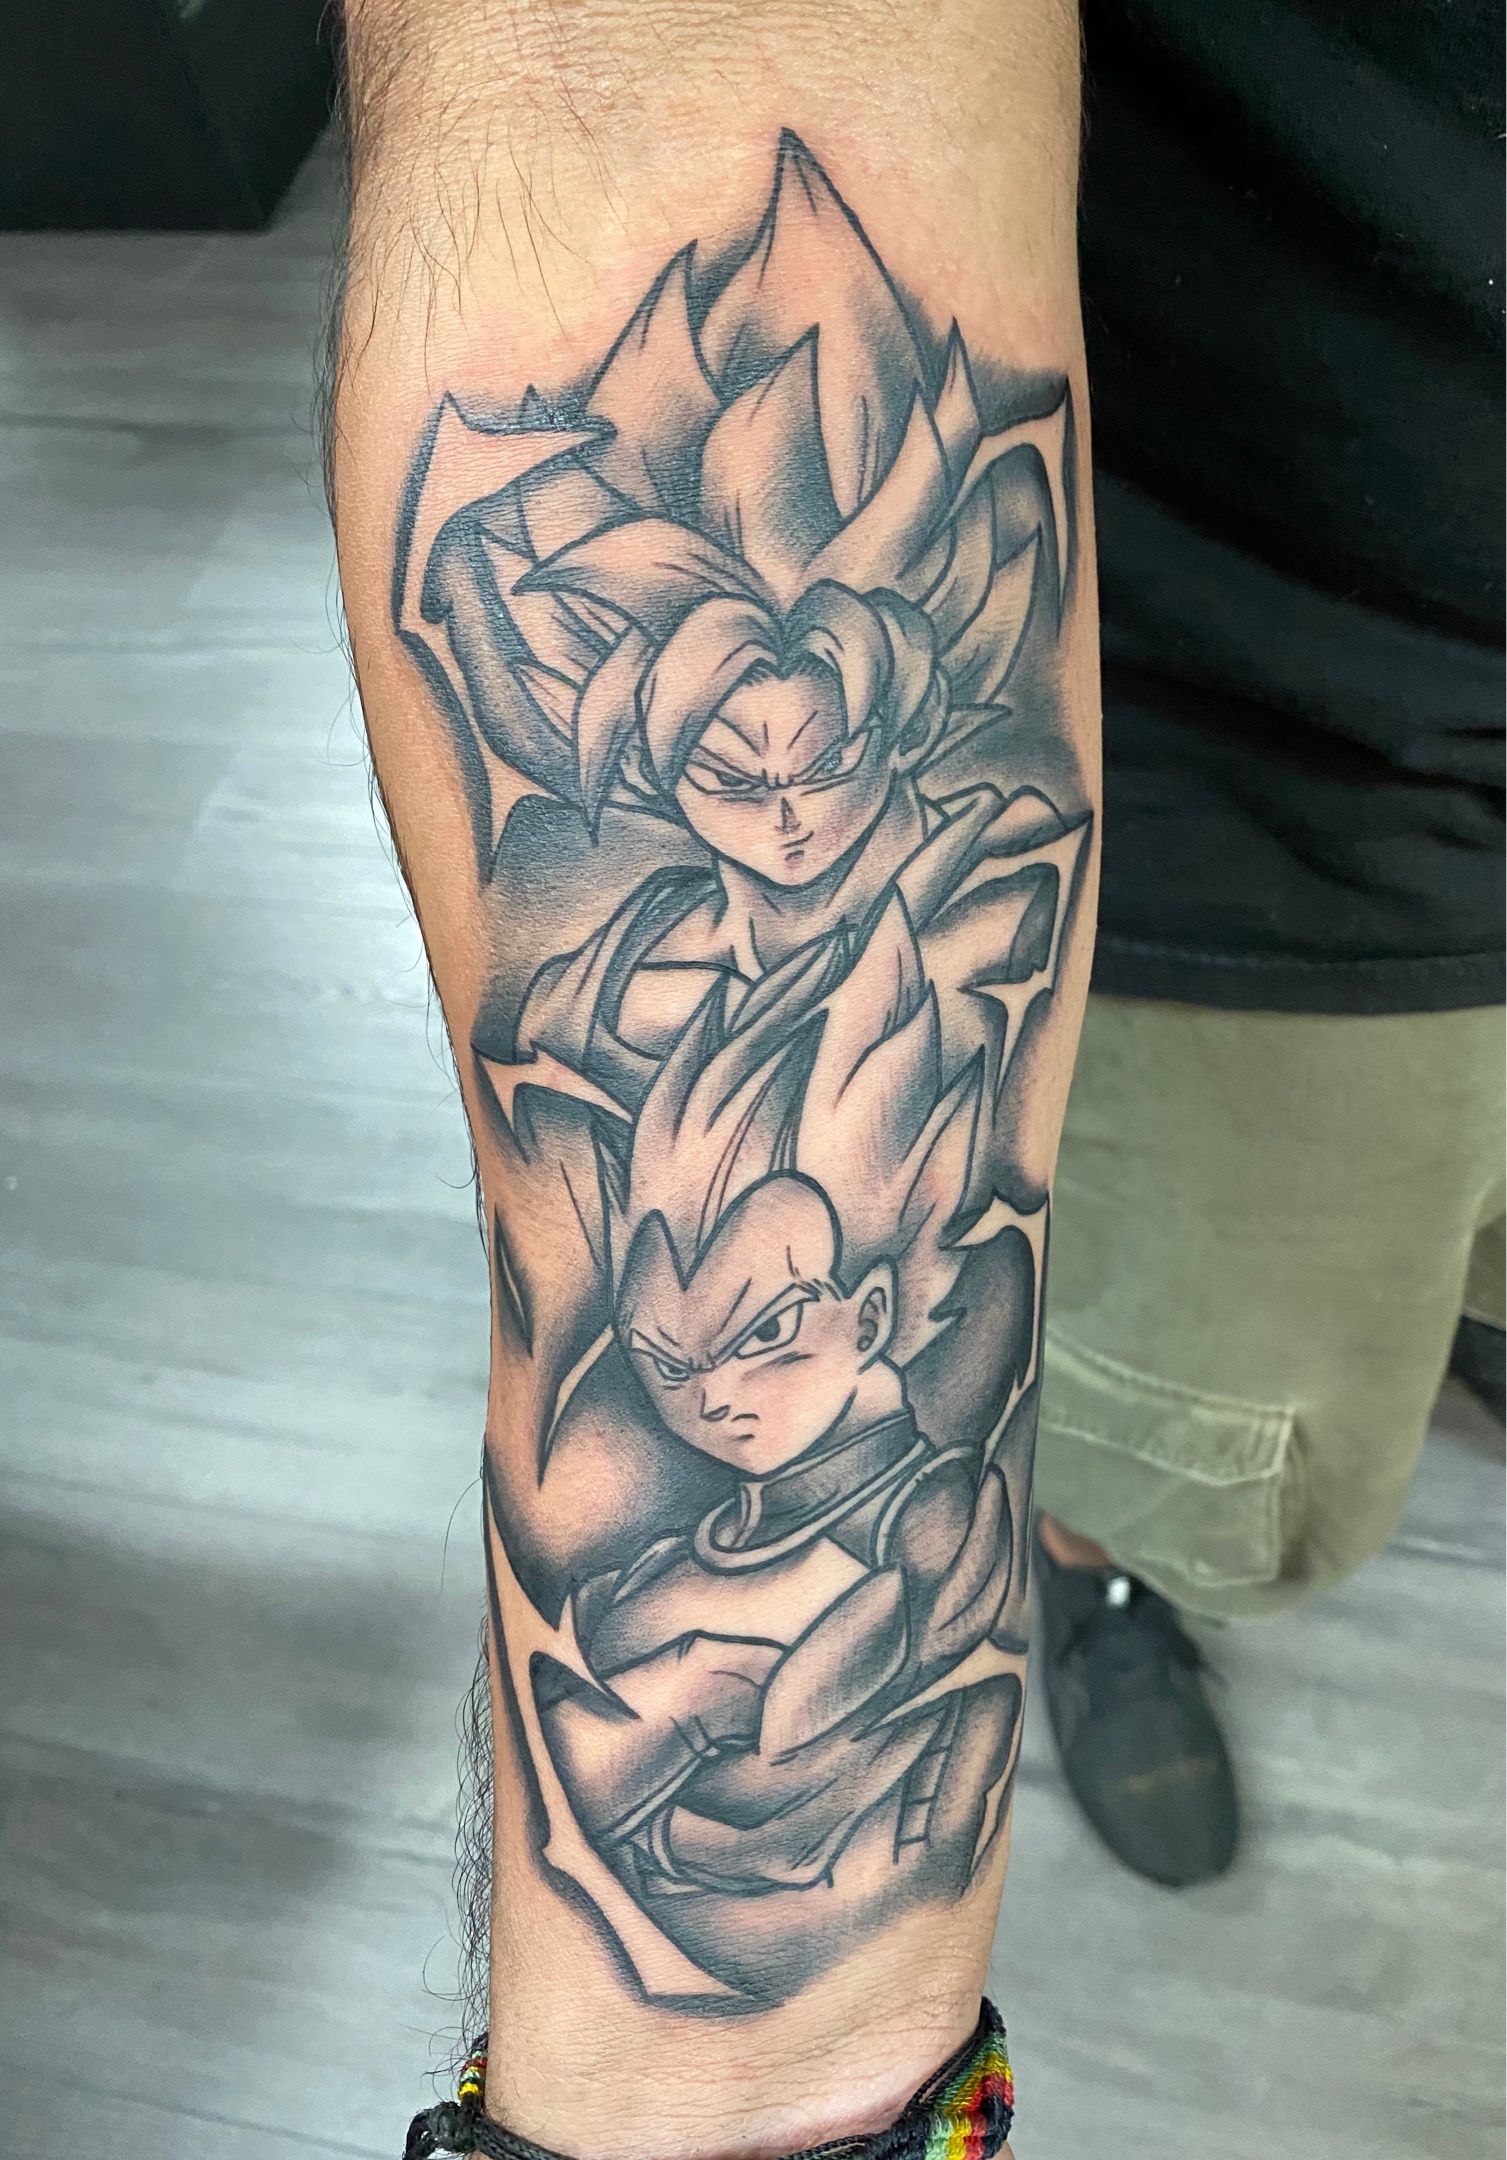 Goku x Vegeta  tattoo by DaveVeroInk by DaveVeroInk on DeviantArt